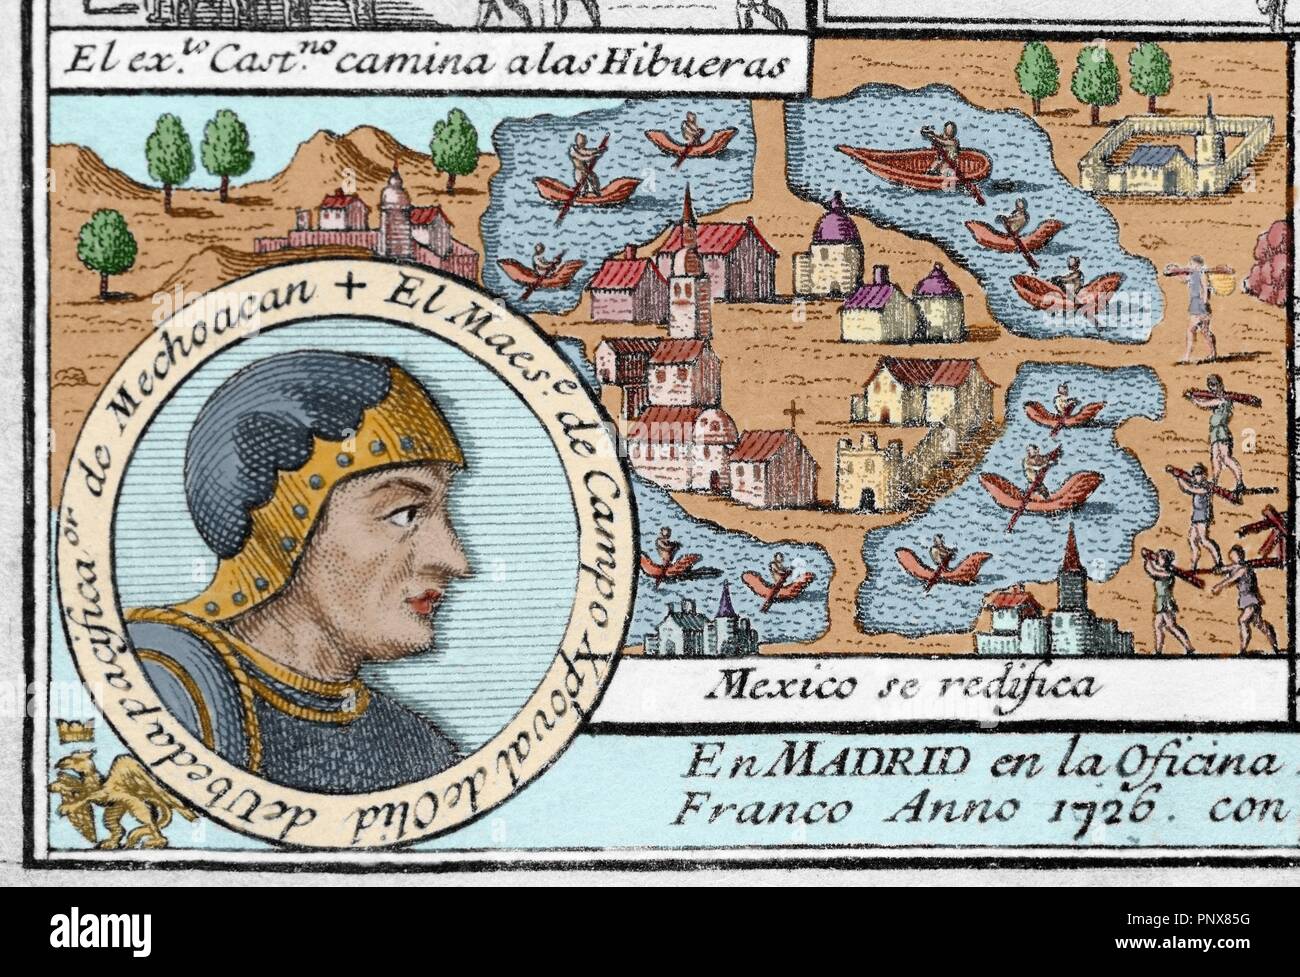 Cristobal de Olid (1488-1524). Spanish conqueror. Colored engraving, 1726. Library University of Barcelona. Spain. Stock Photo